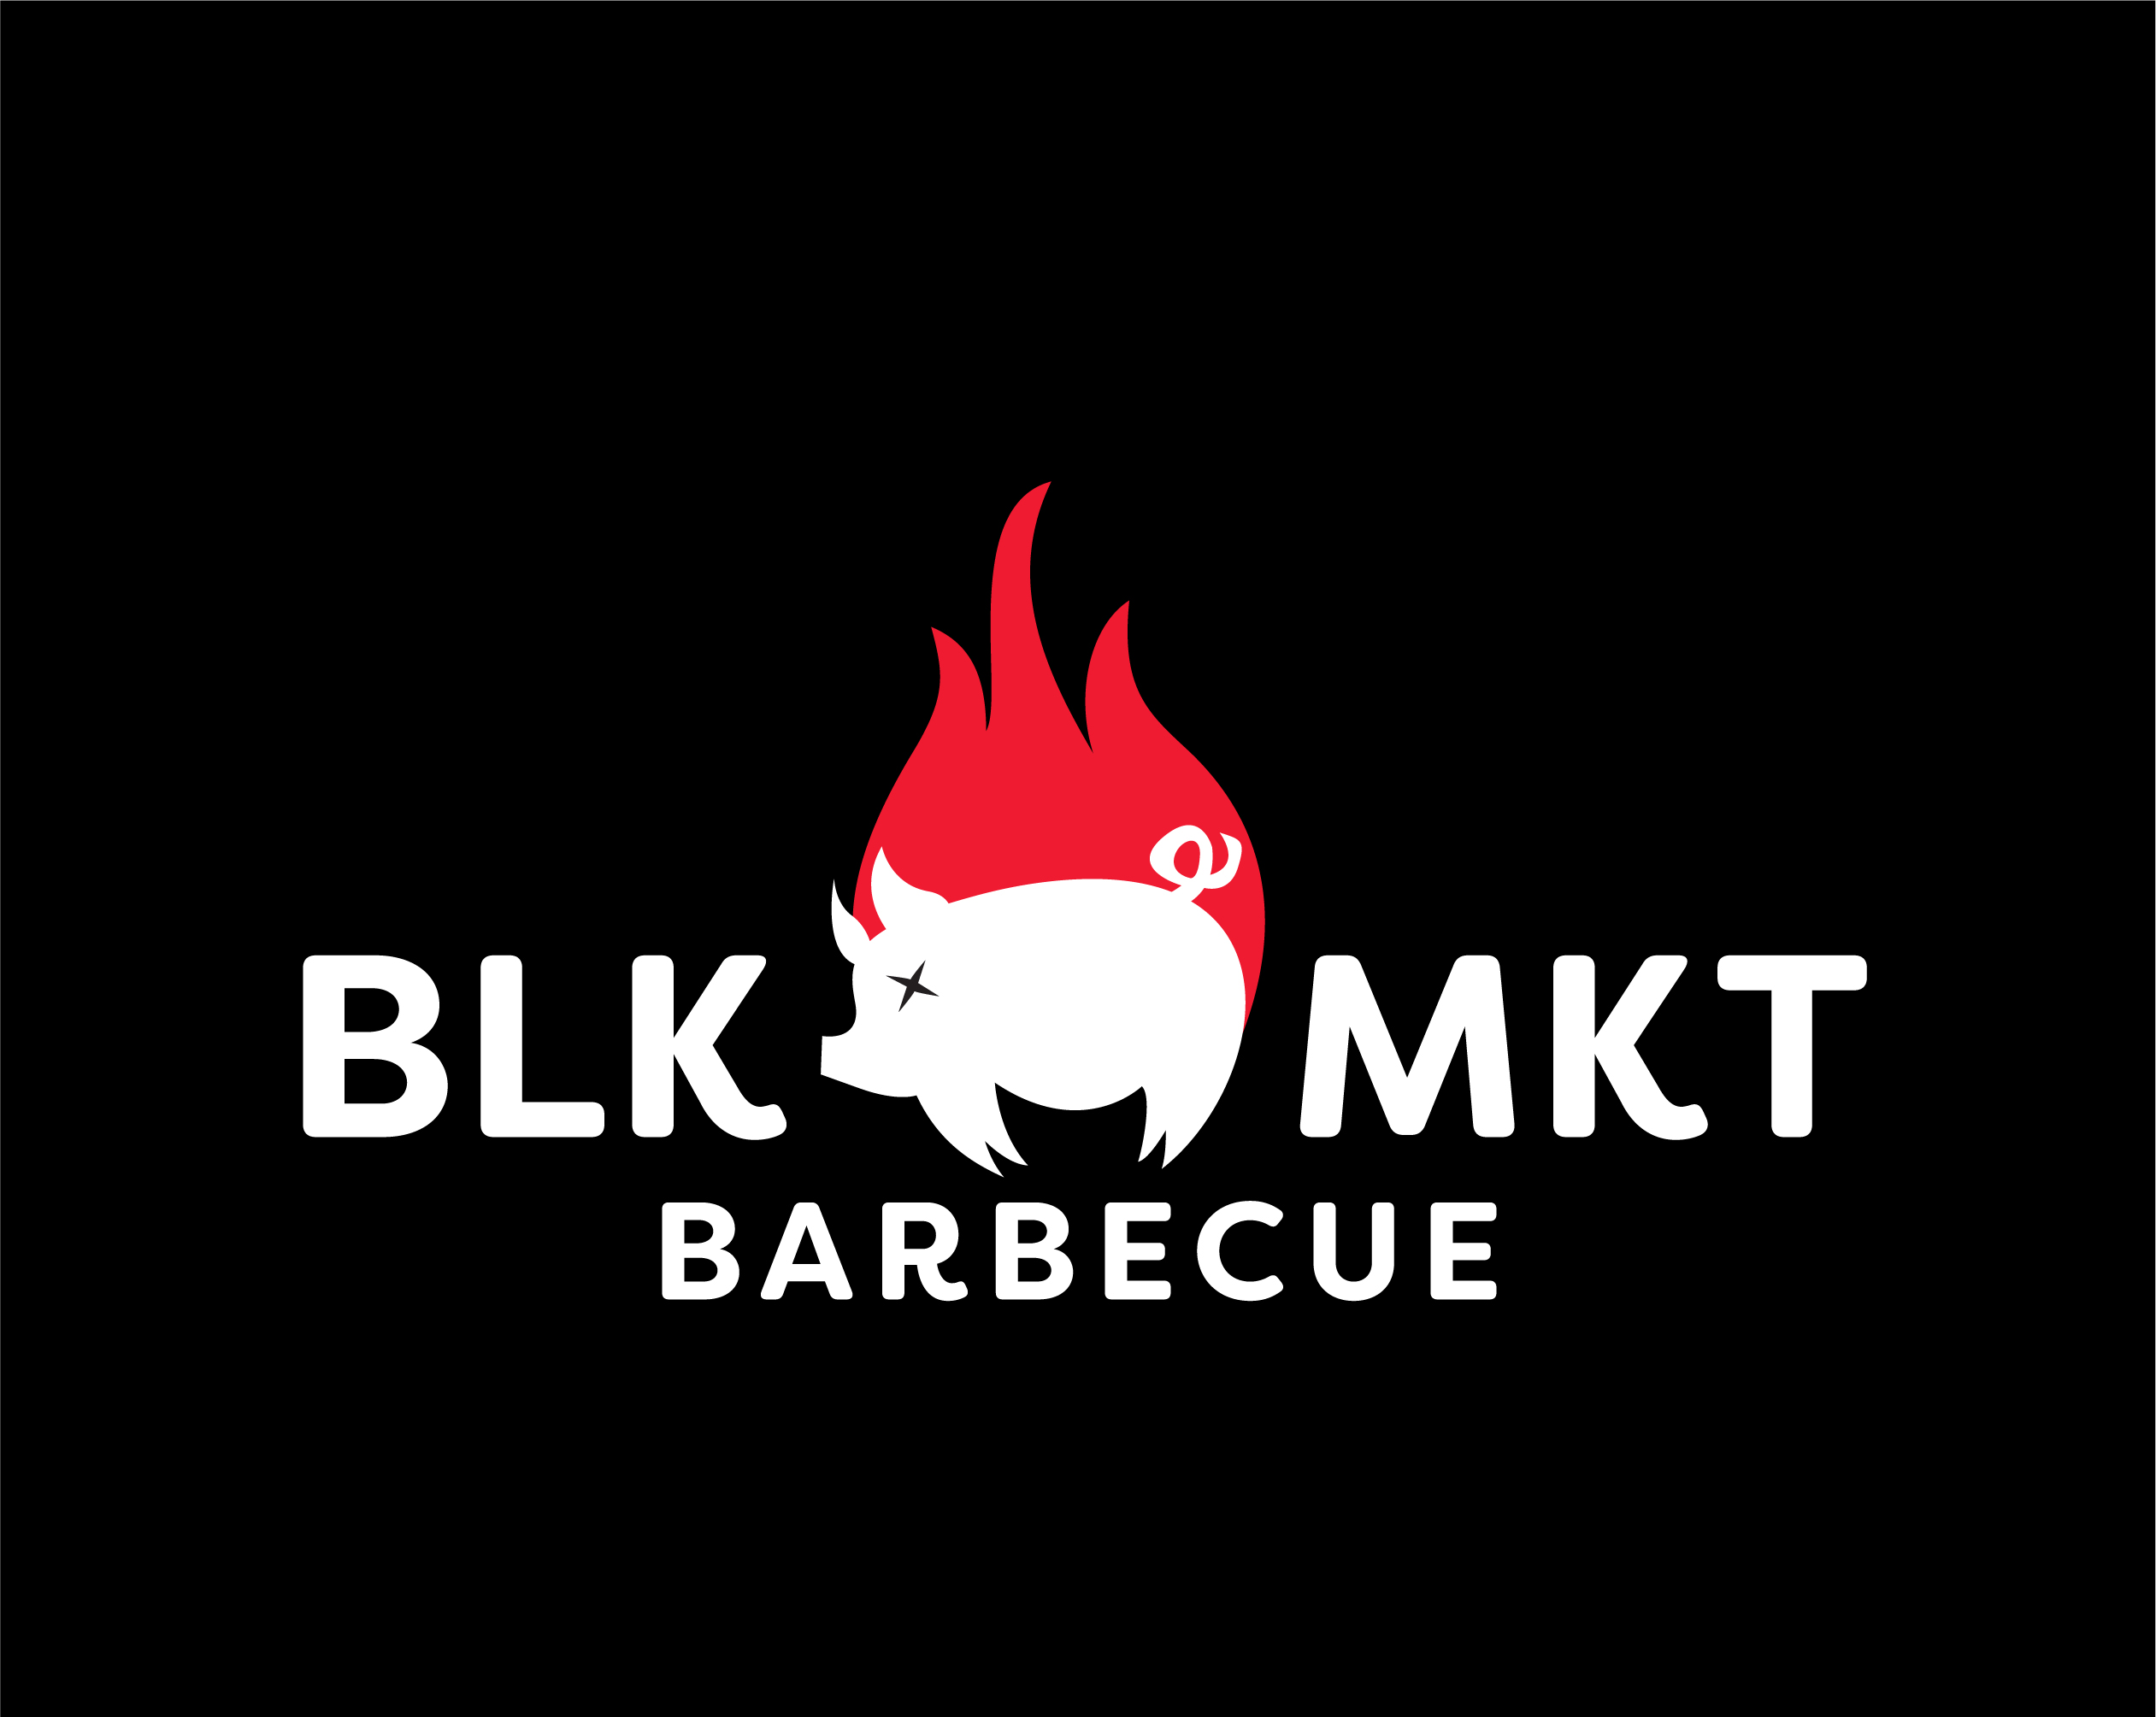 Black Market Barbecue